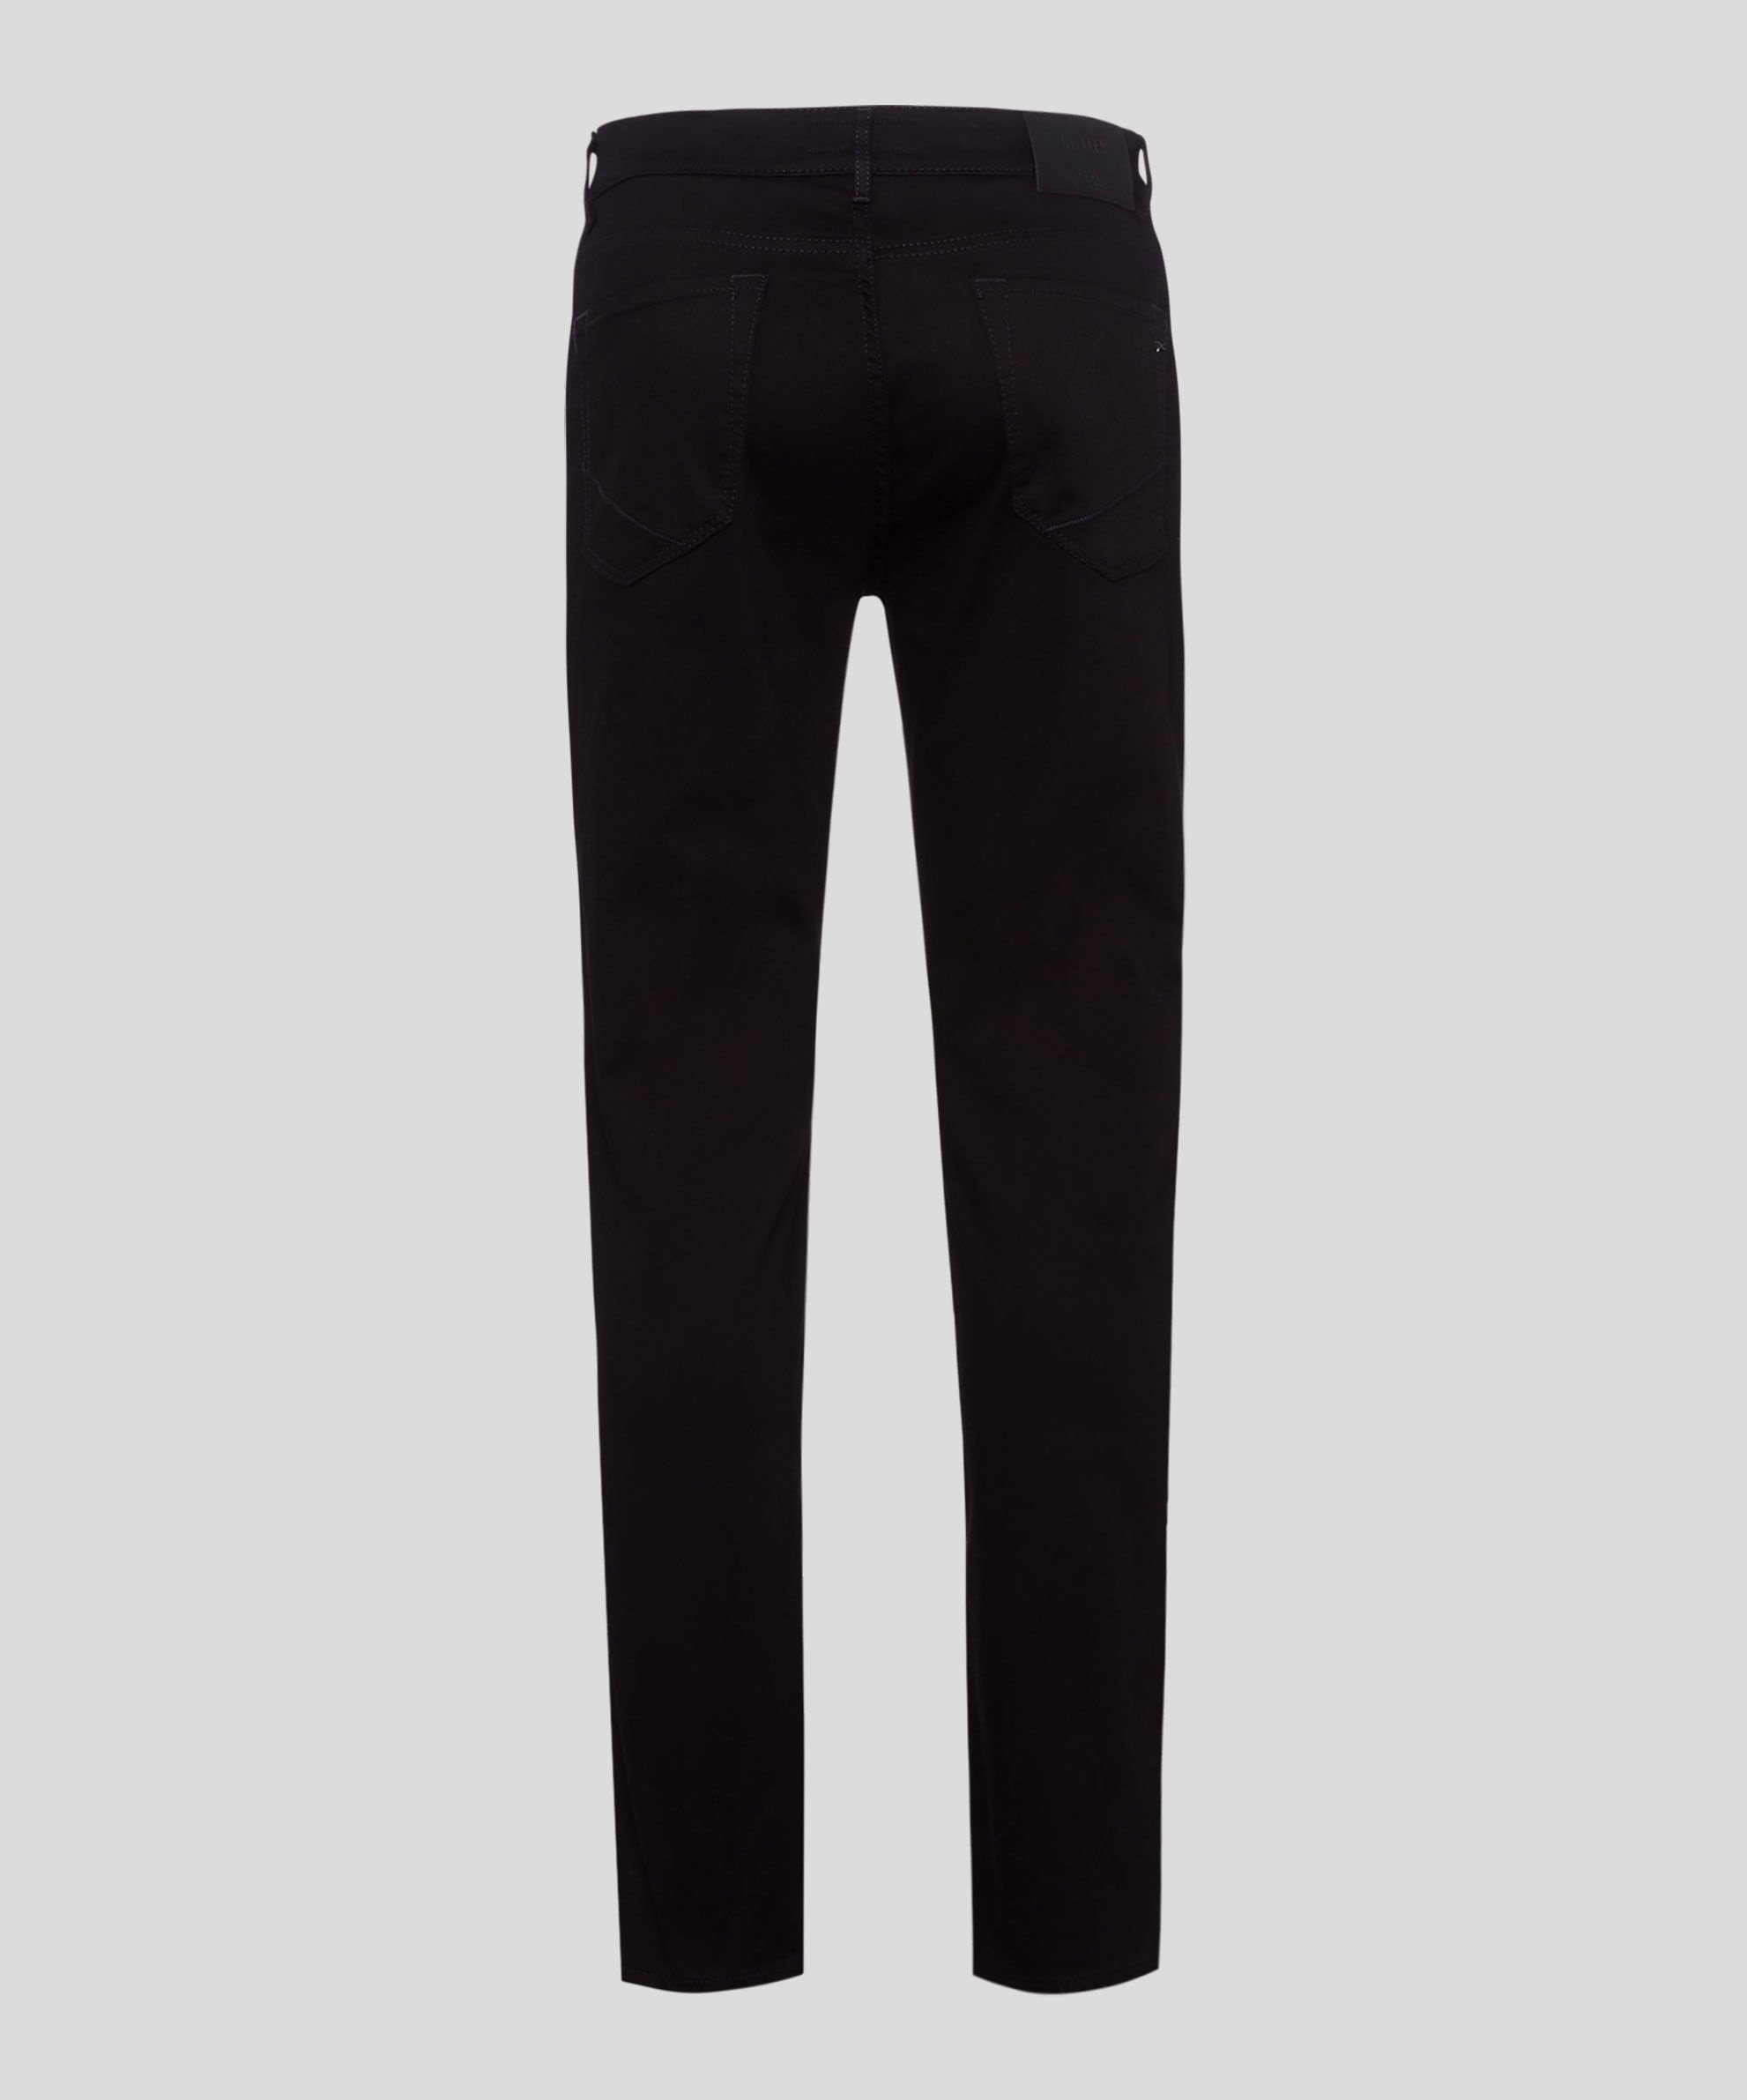 Brax Five-Pocket-Jeans Slim-fit-Jeans perma black